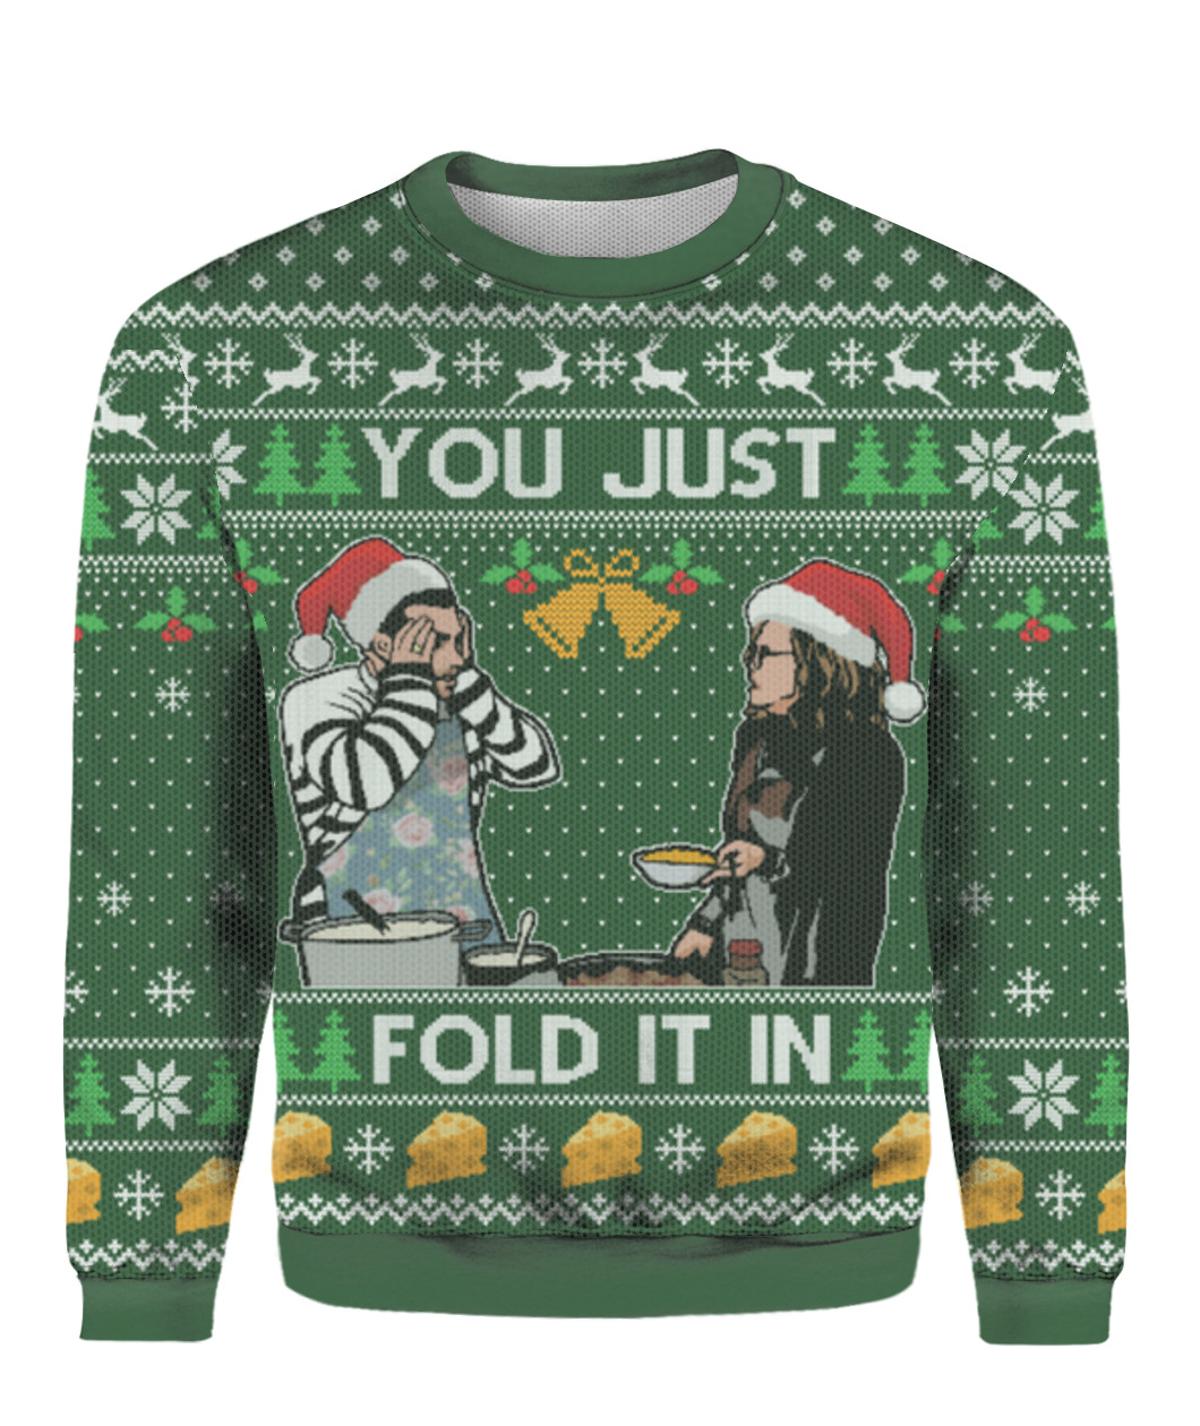 Eff You Ok Sloth Christmas Sweater